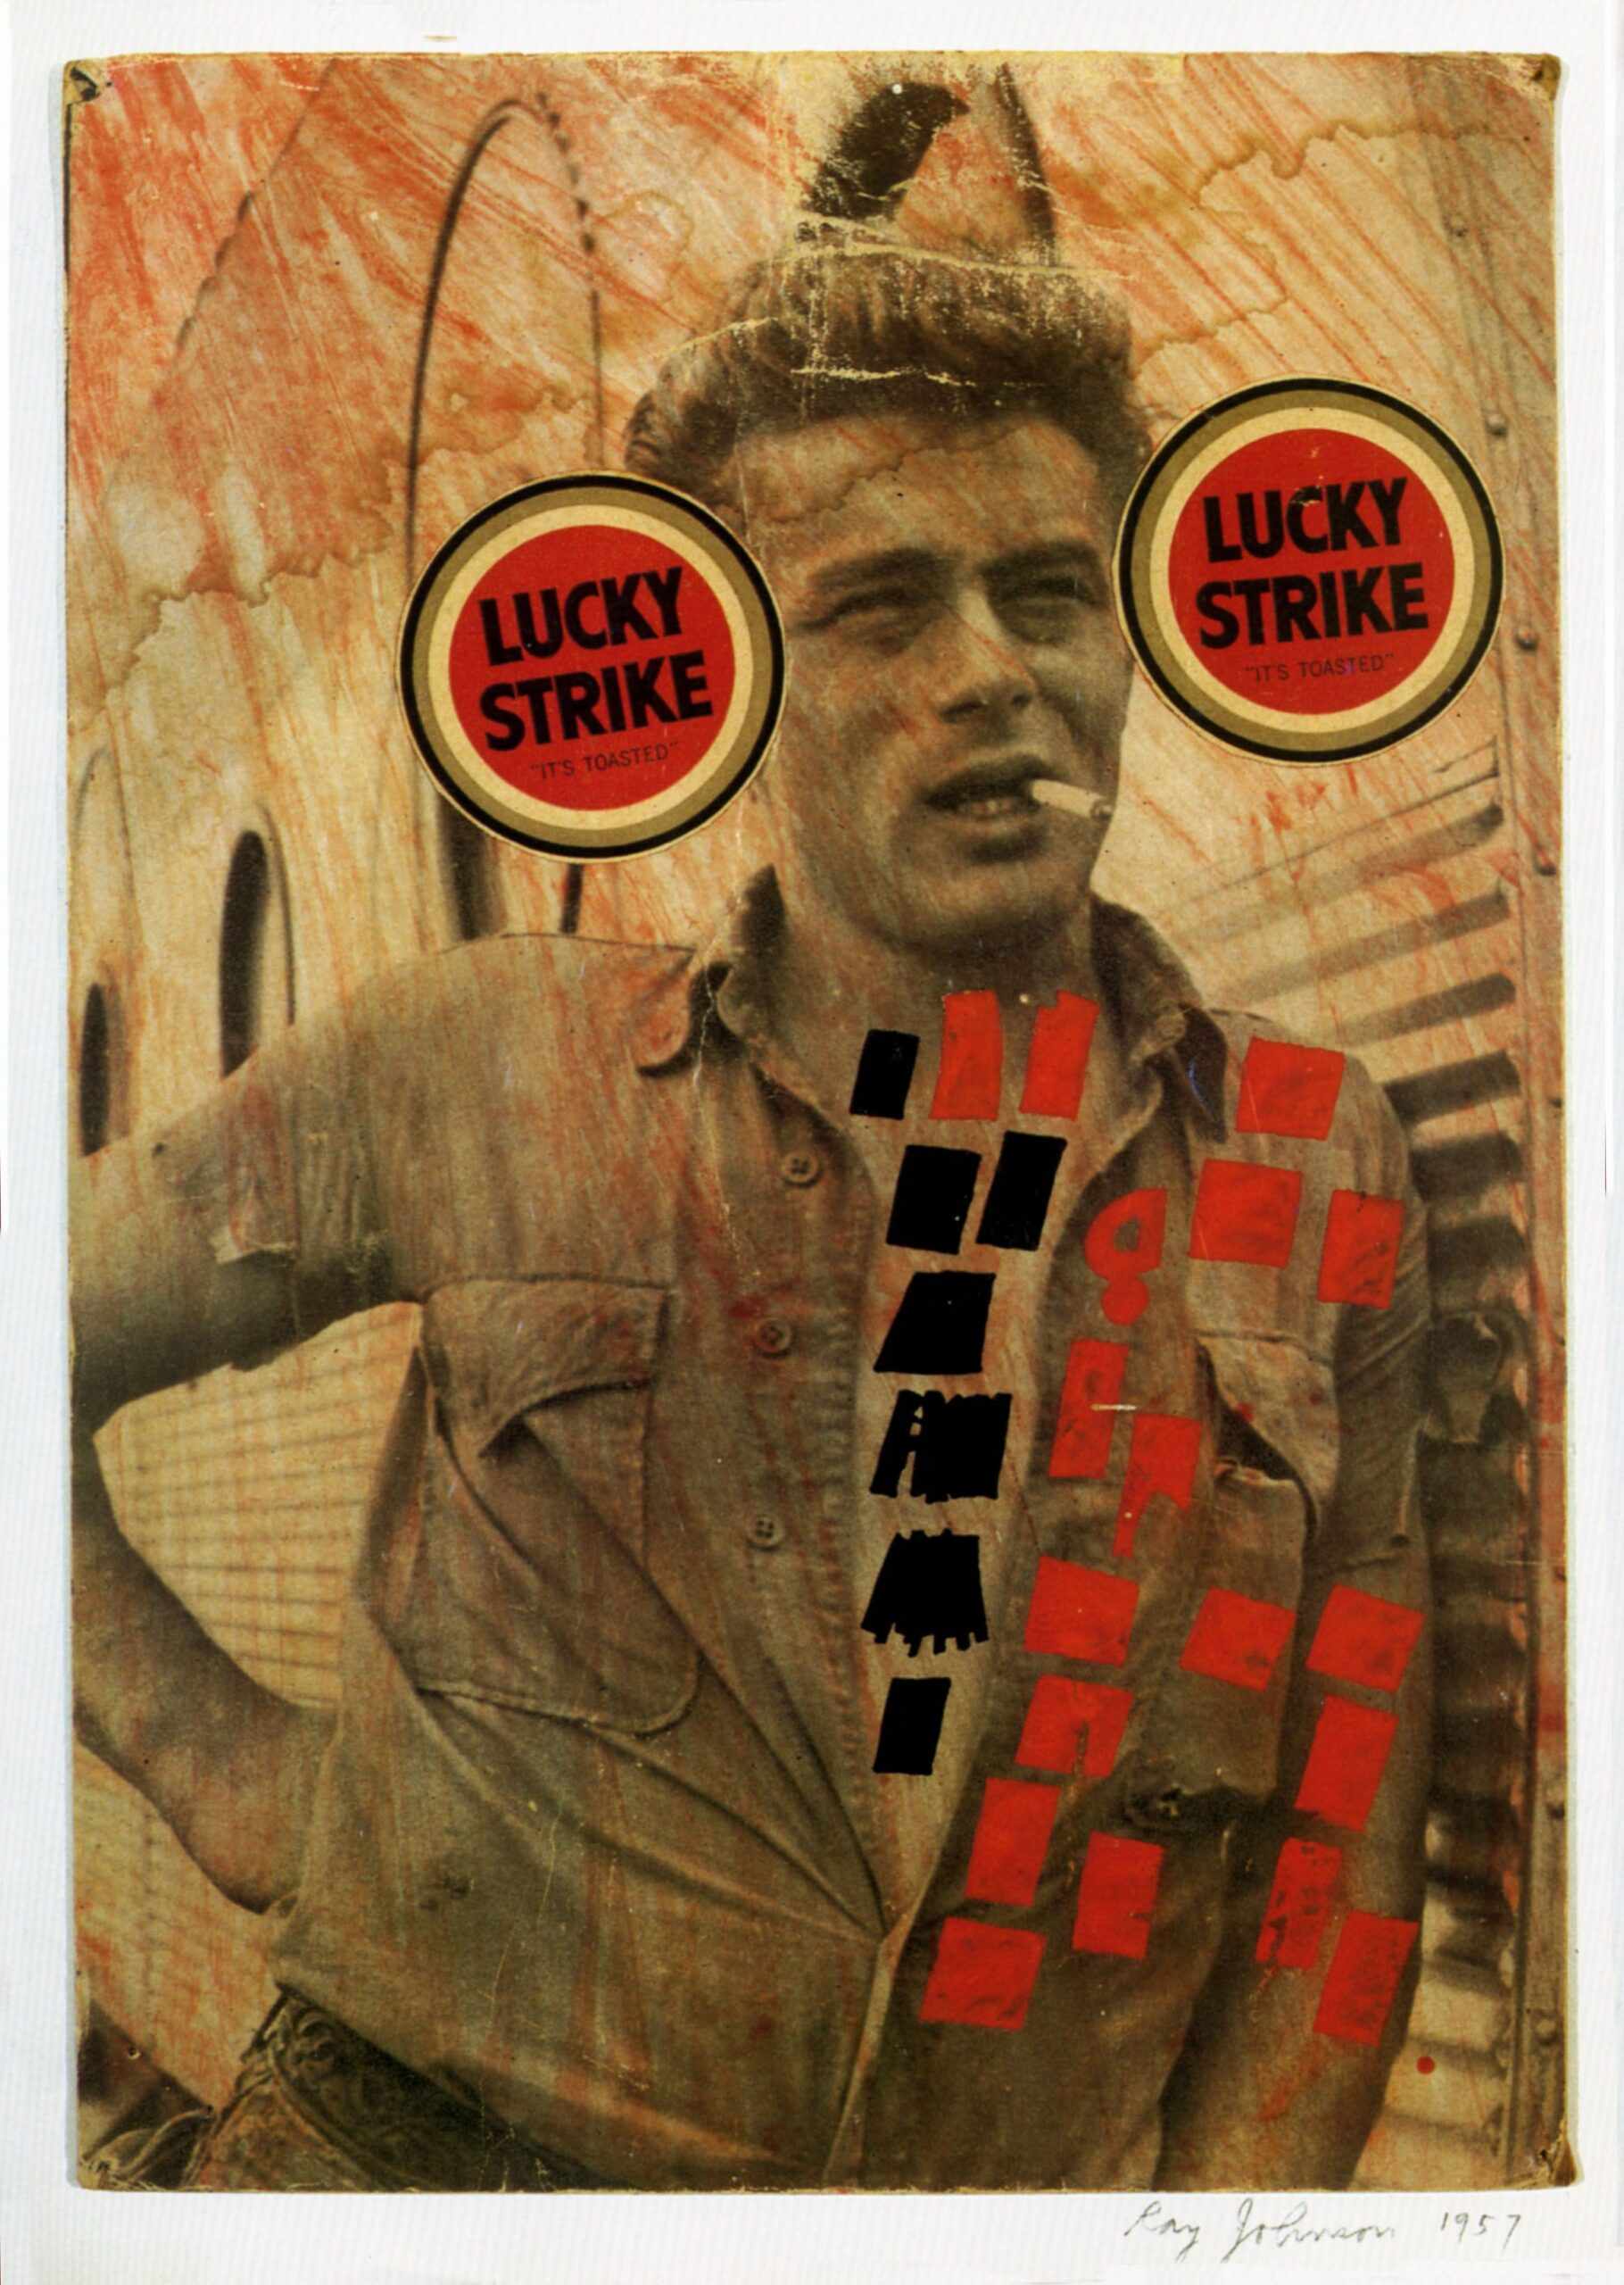 Ray Johnson, James Dean (Lucky Strike), 1957